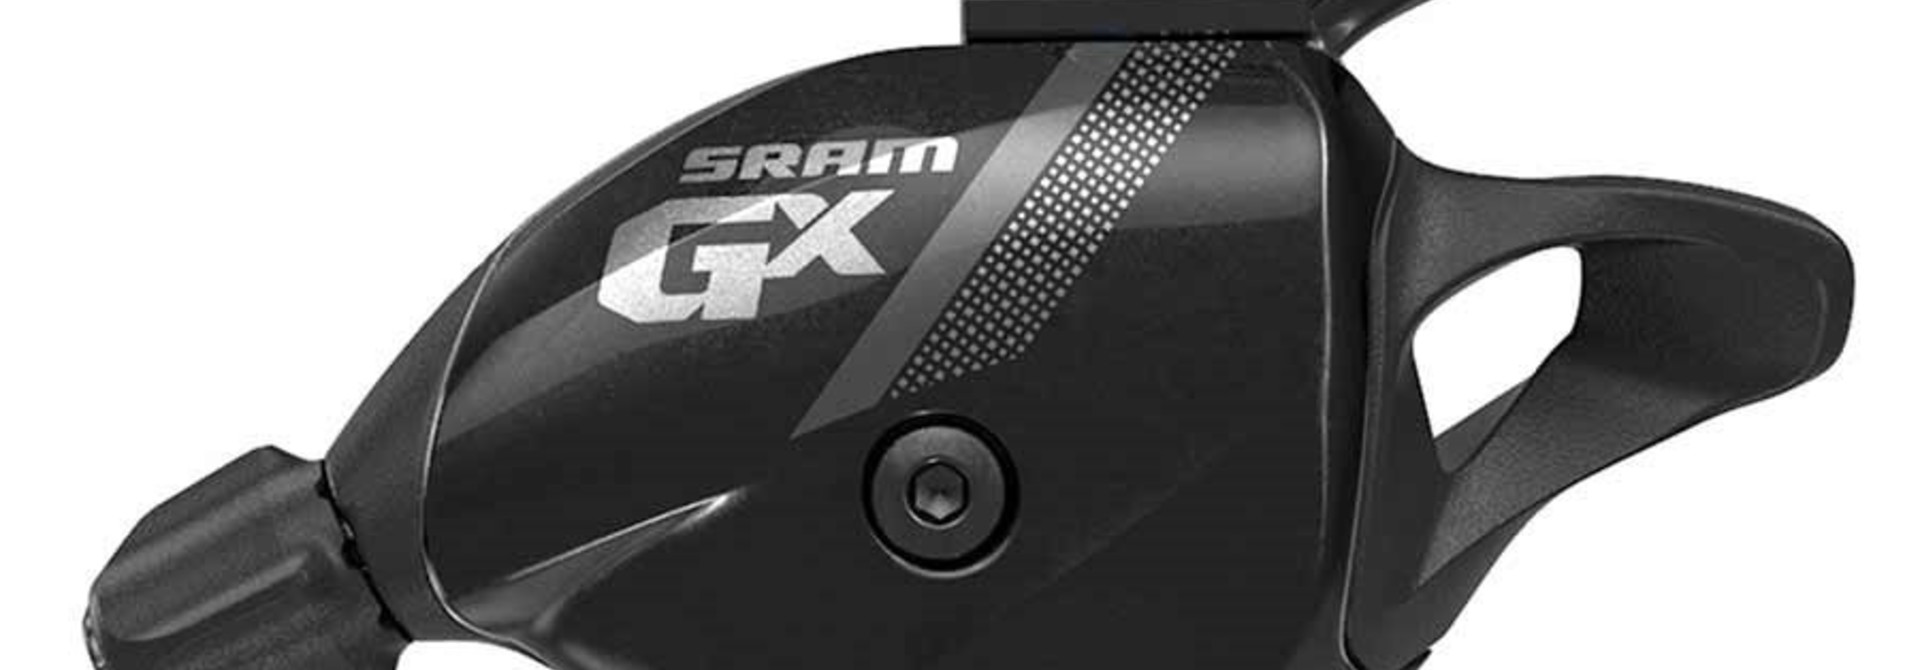 SRAM GX 10 speed Shift lever - Right